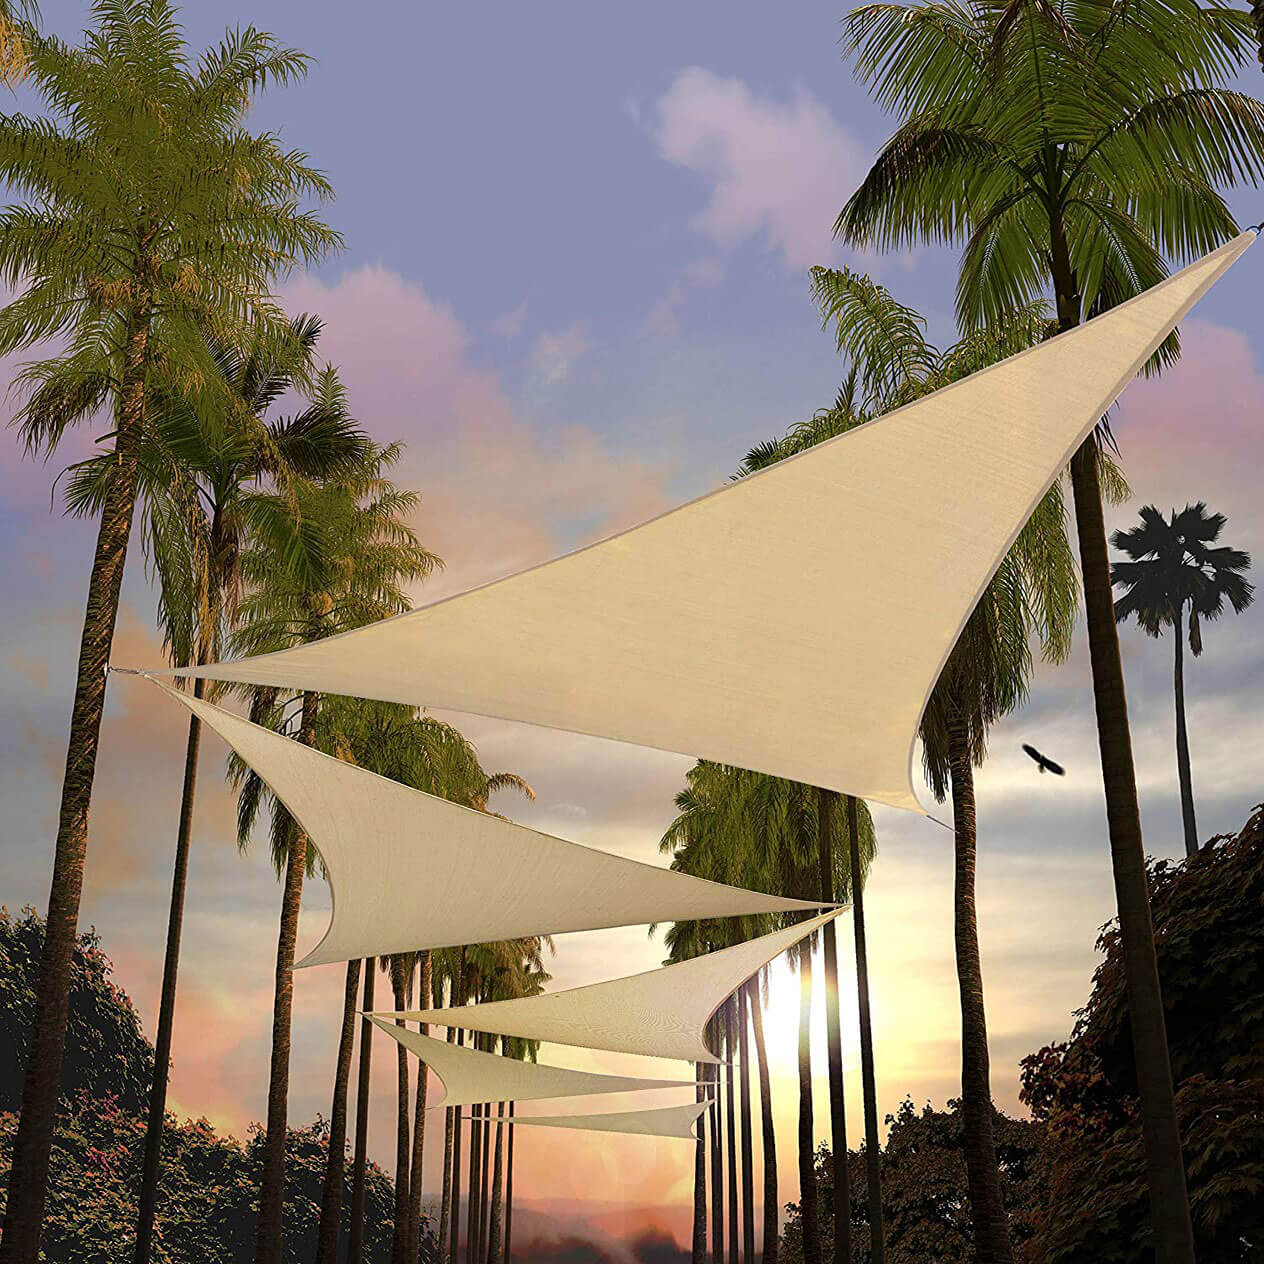 Vela ombreggiante parasole triangolare - Best Pet&House